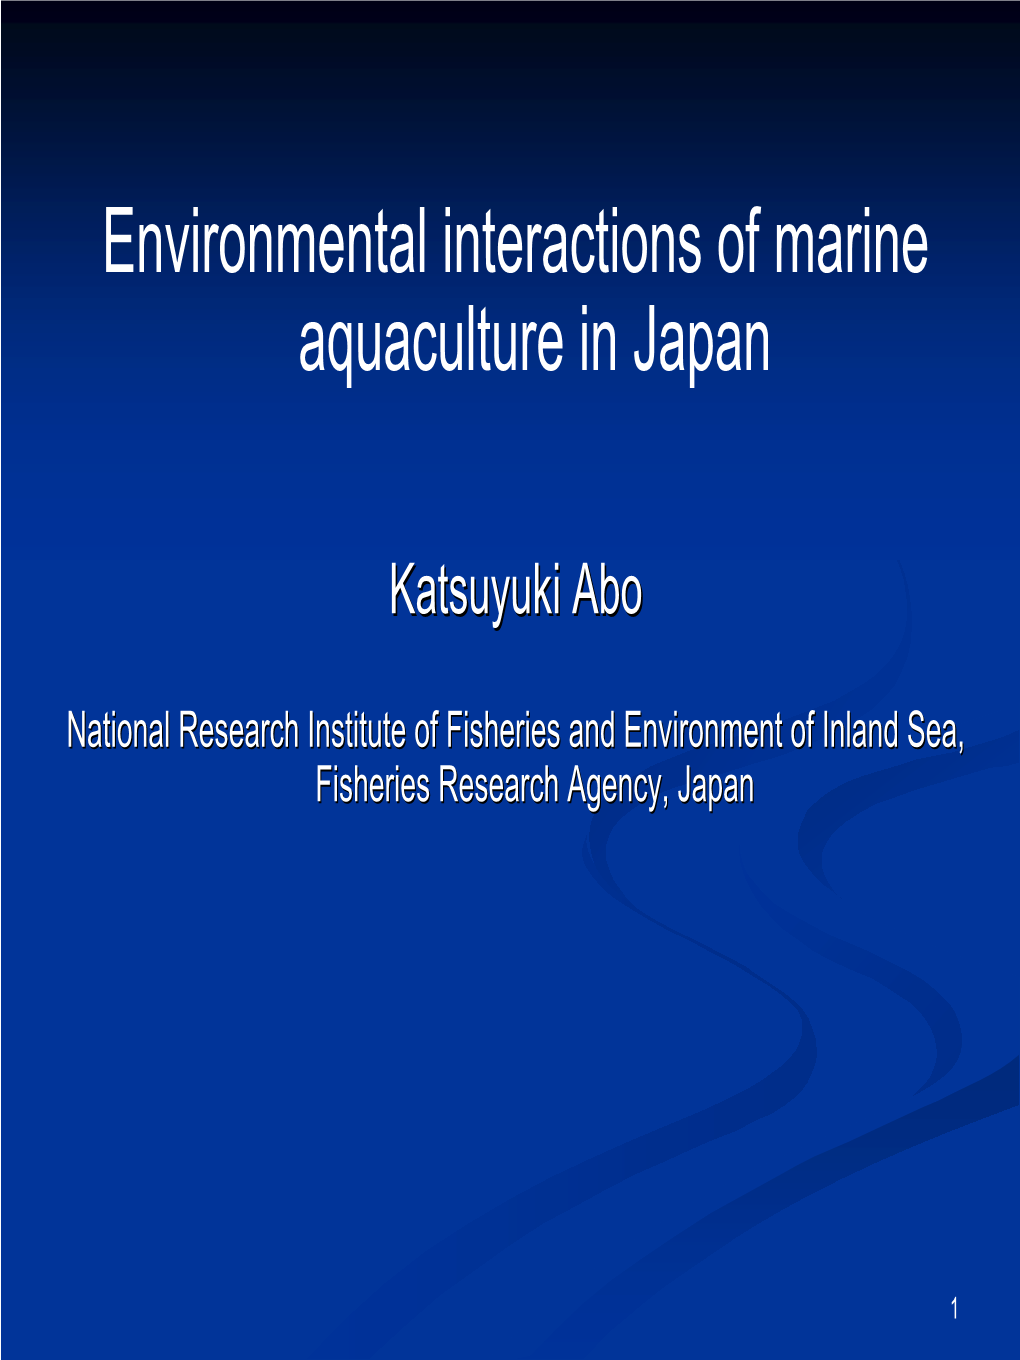 Environmental Interactions of Marine Aquaculture in Japan